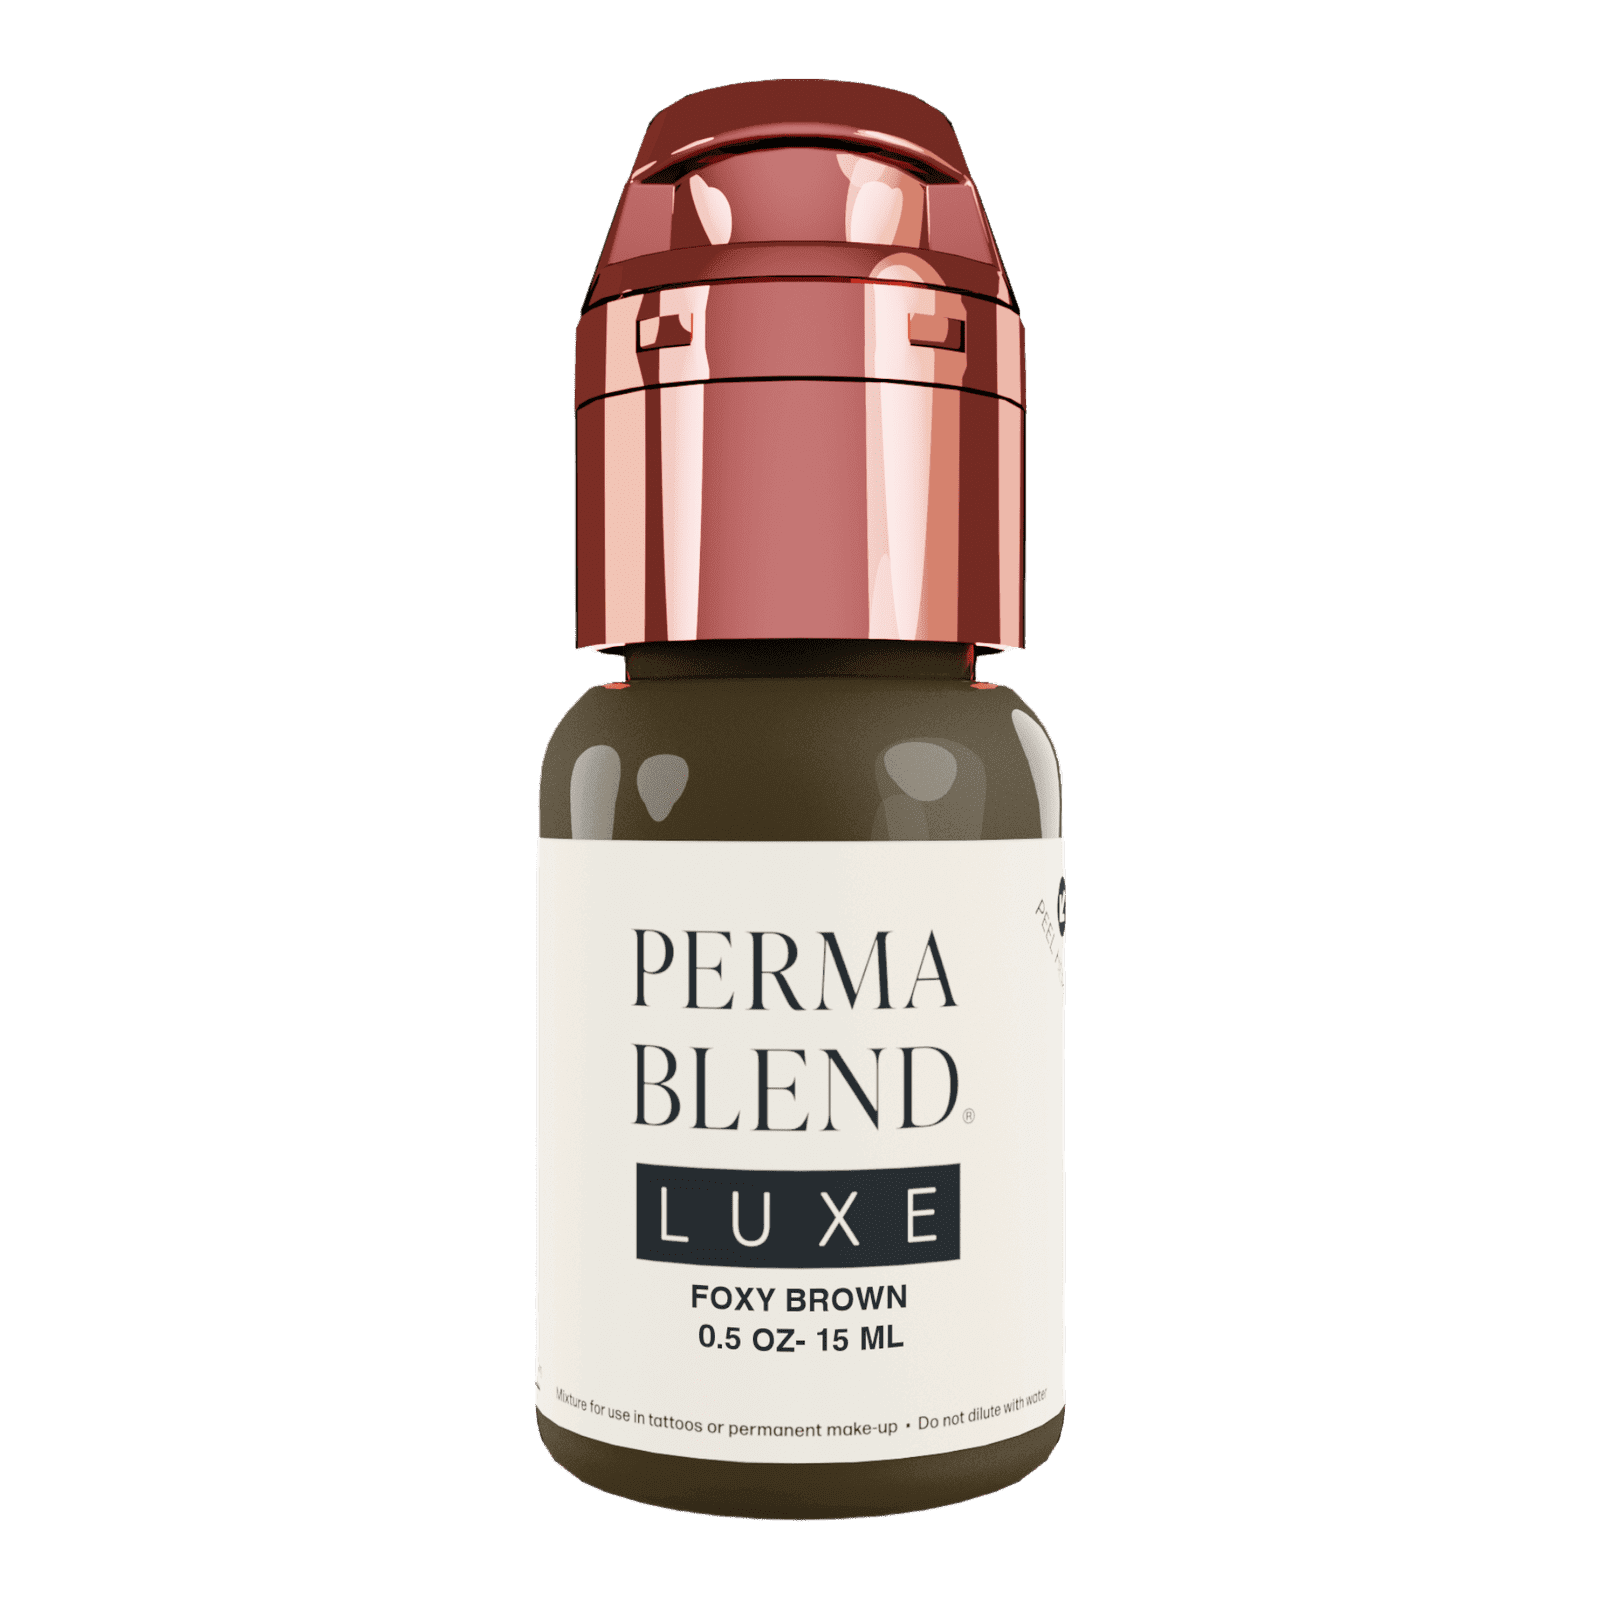 Perma Blend Luxe Foxy Brown Pigmento PMU 15ml